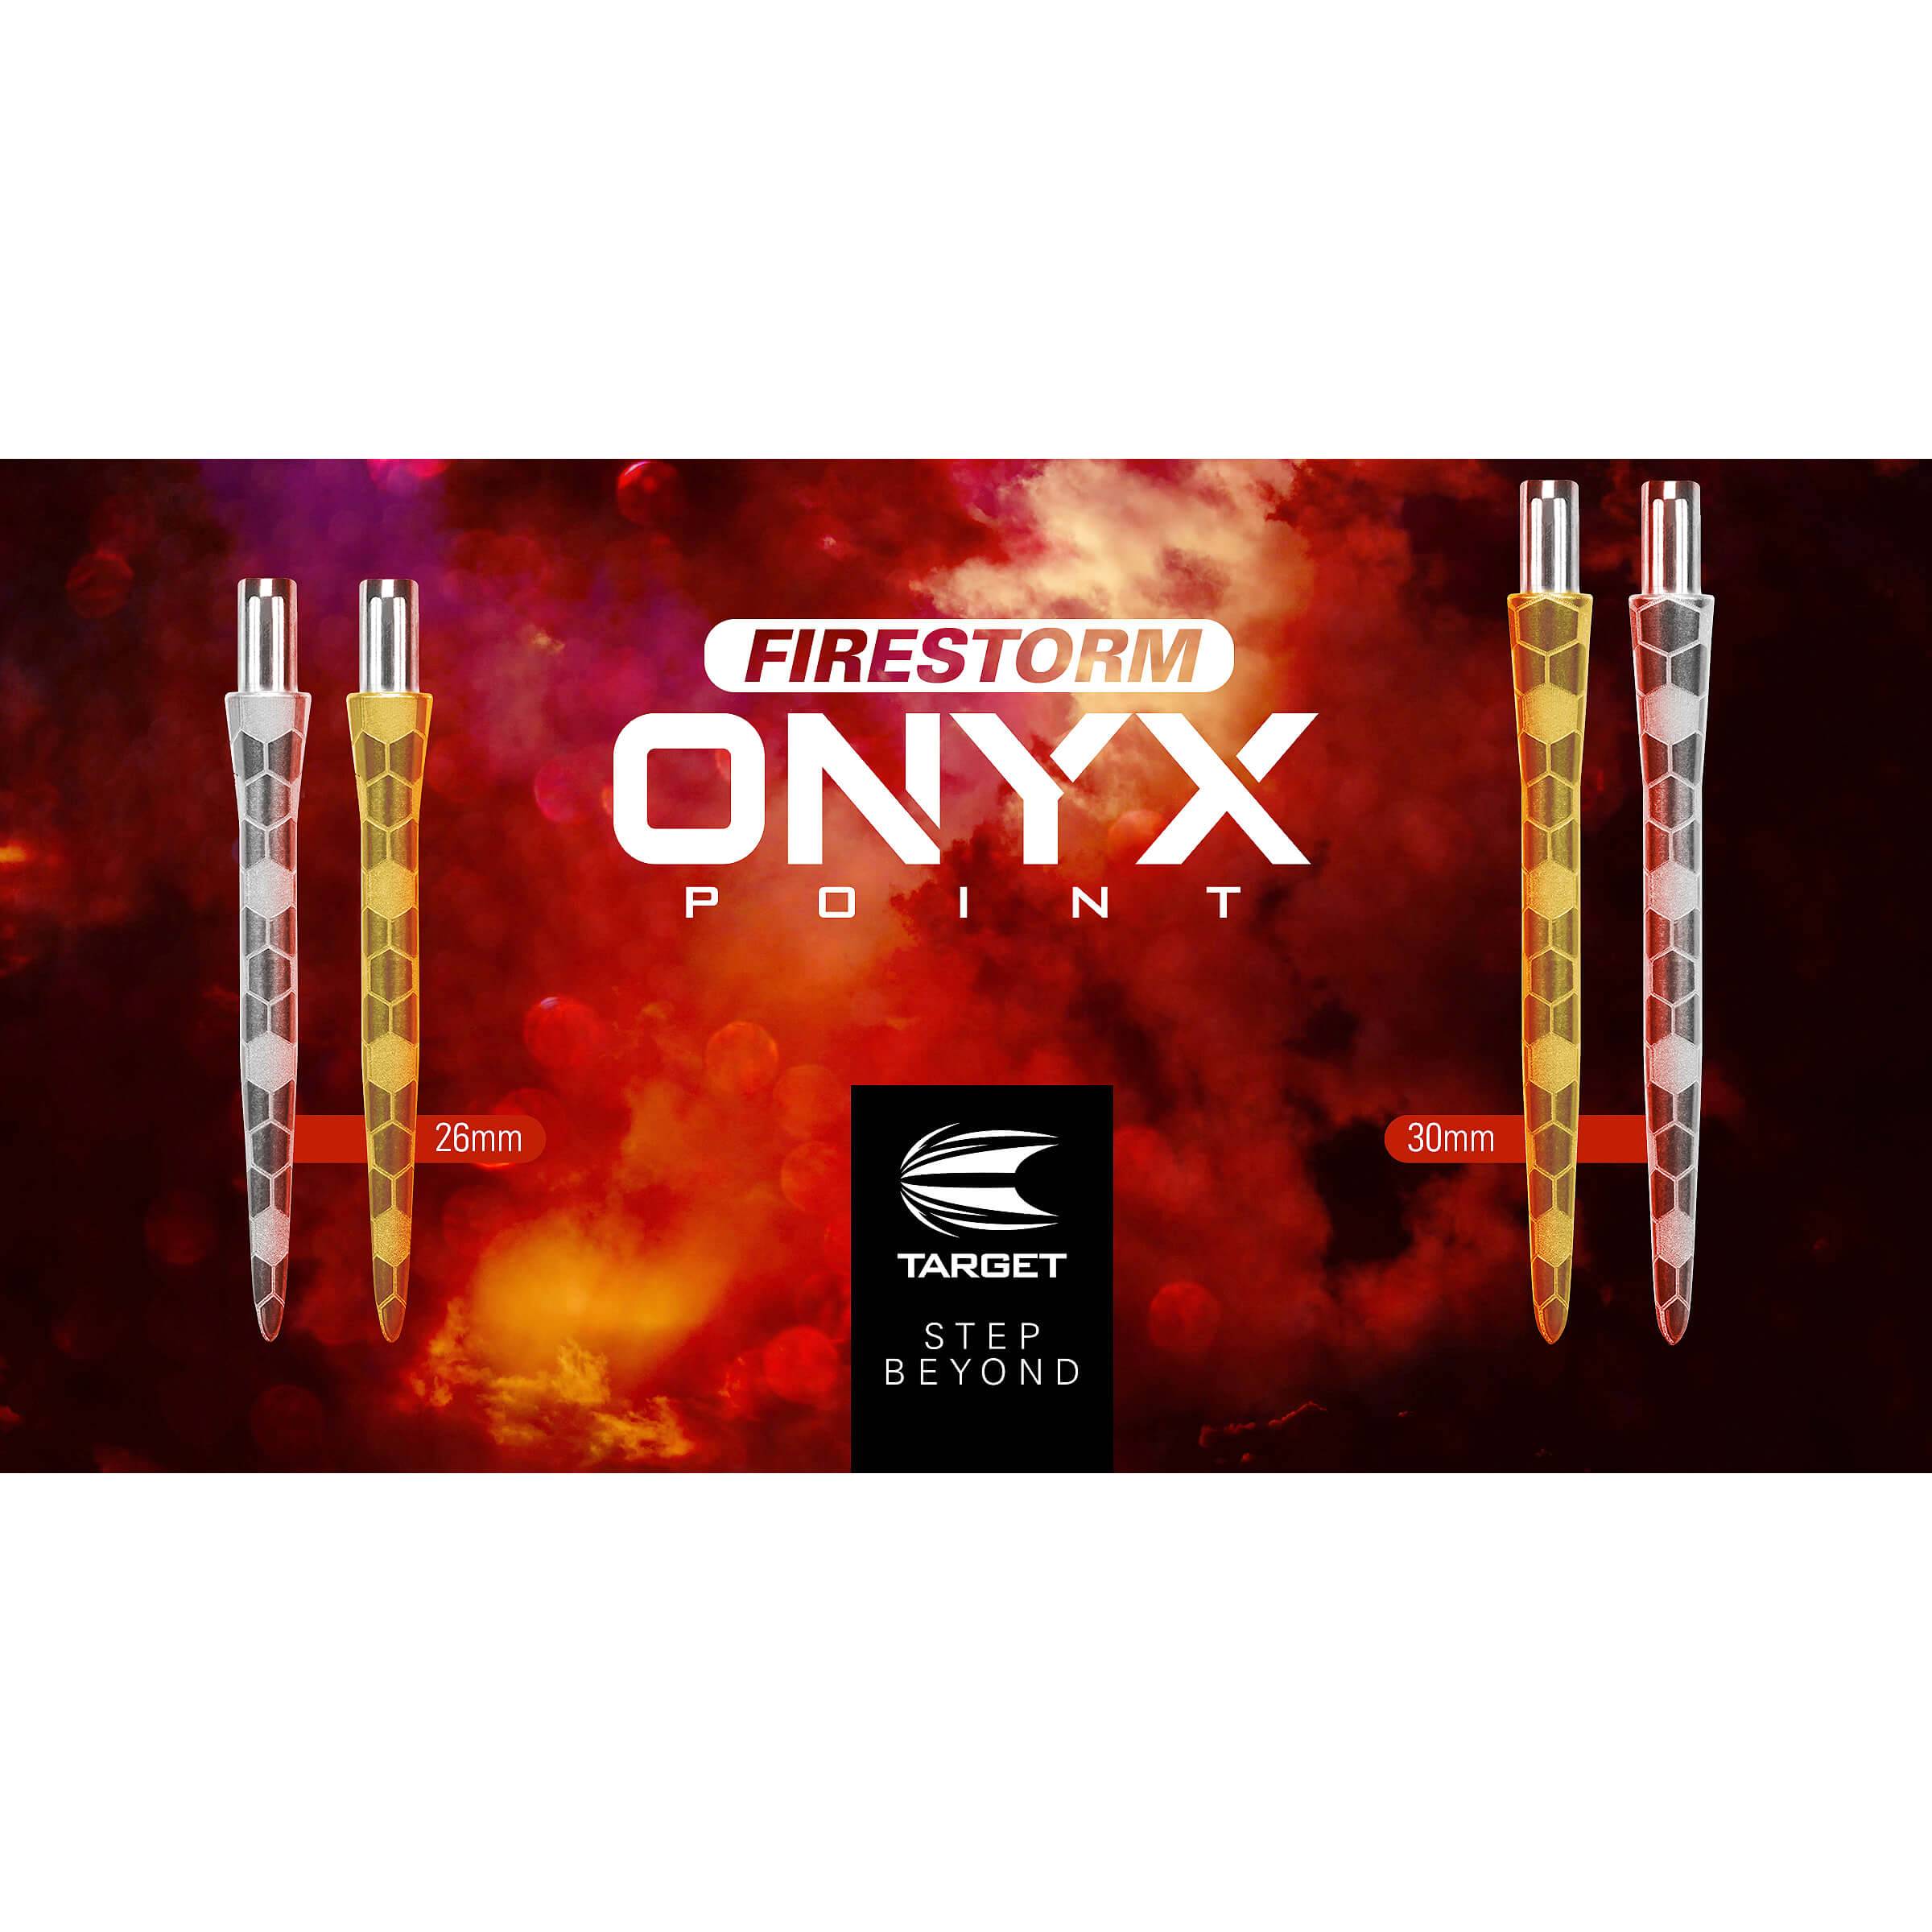 Target - Firestorm Point Onyx - Gold